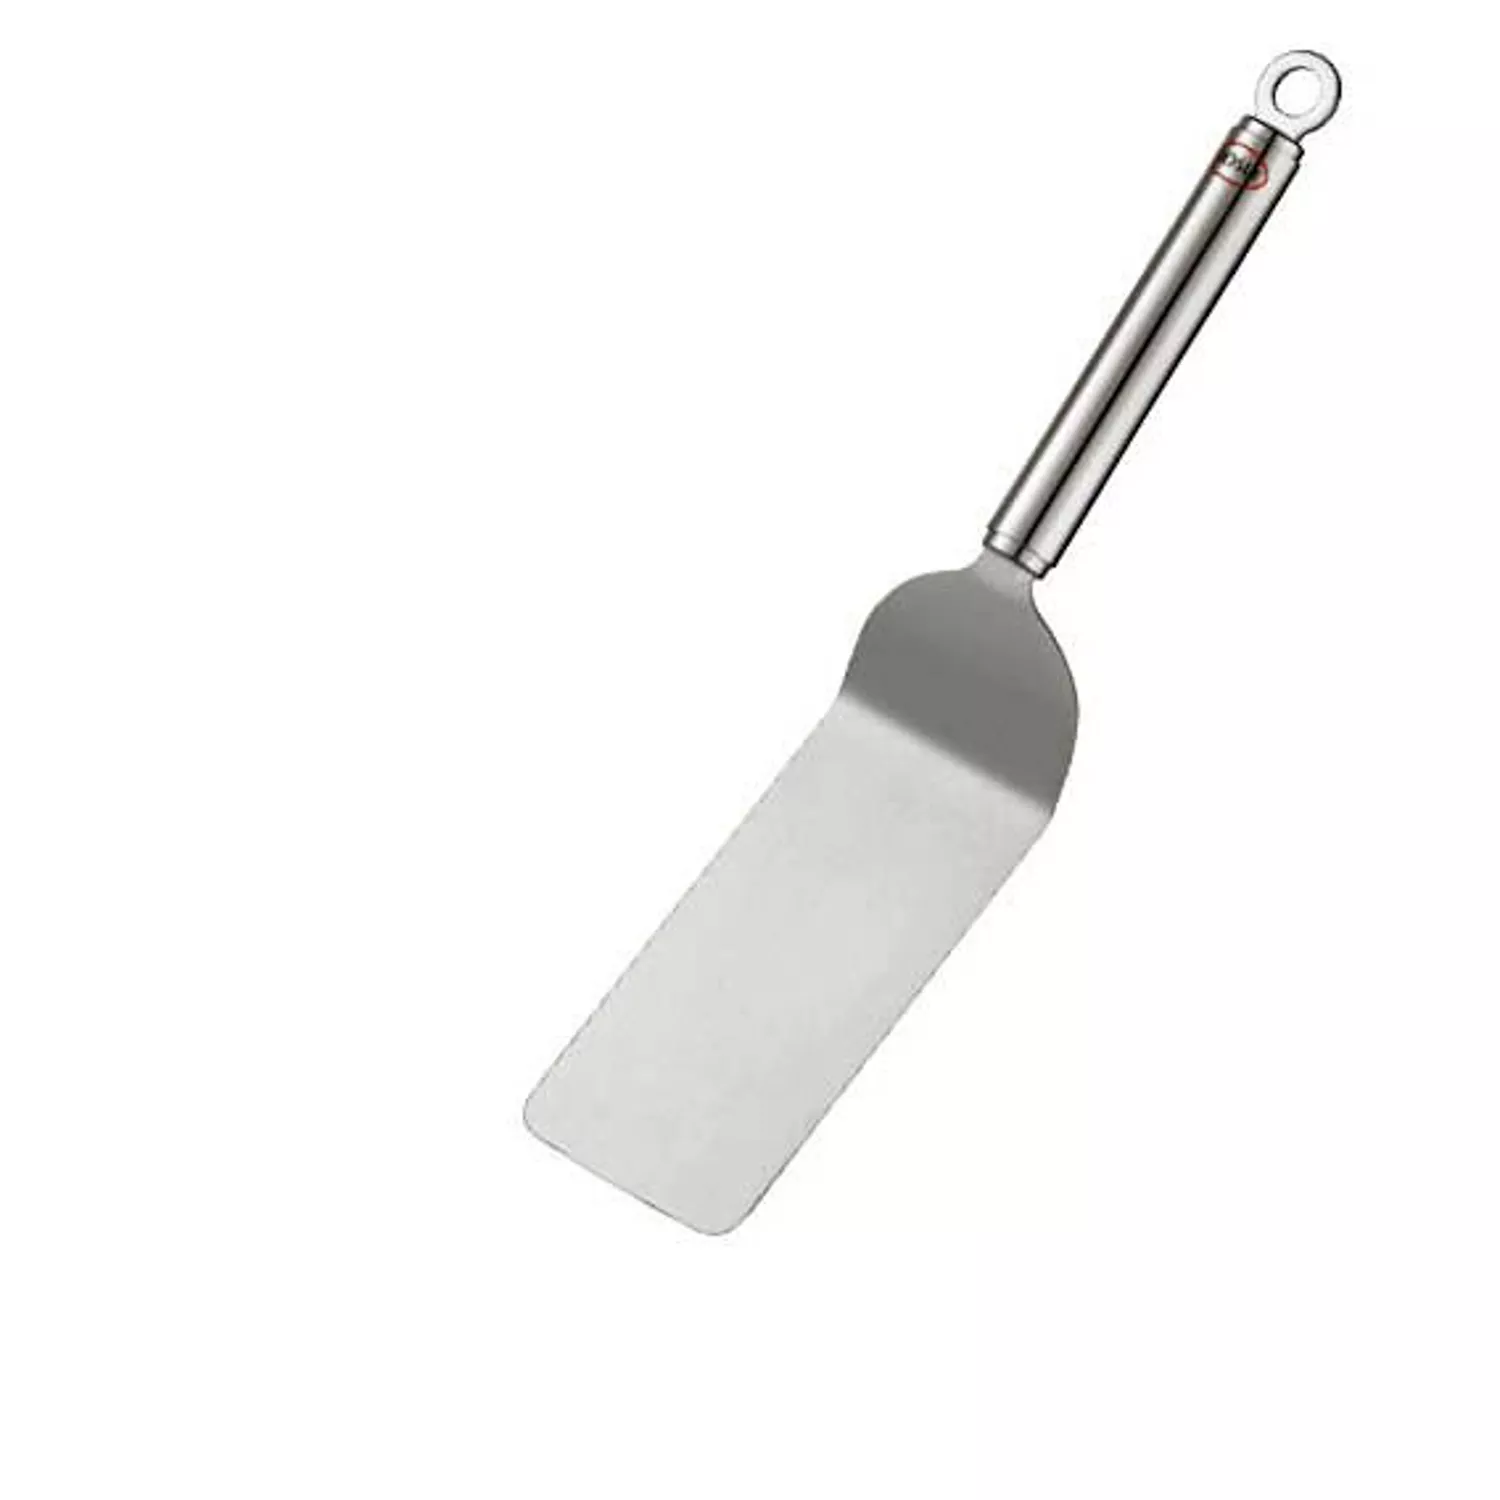 Victorinox curved spatula